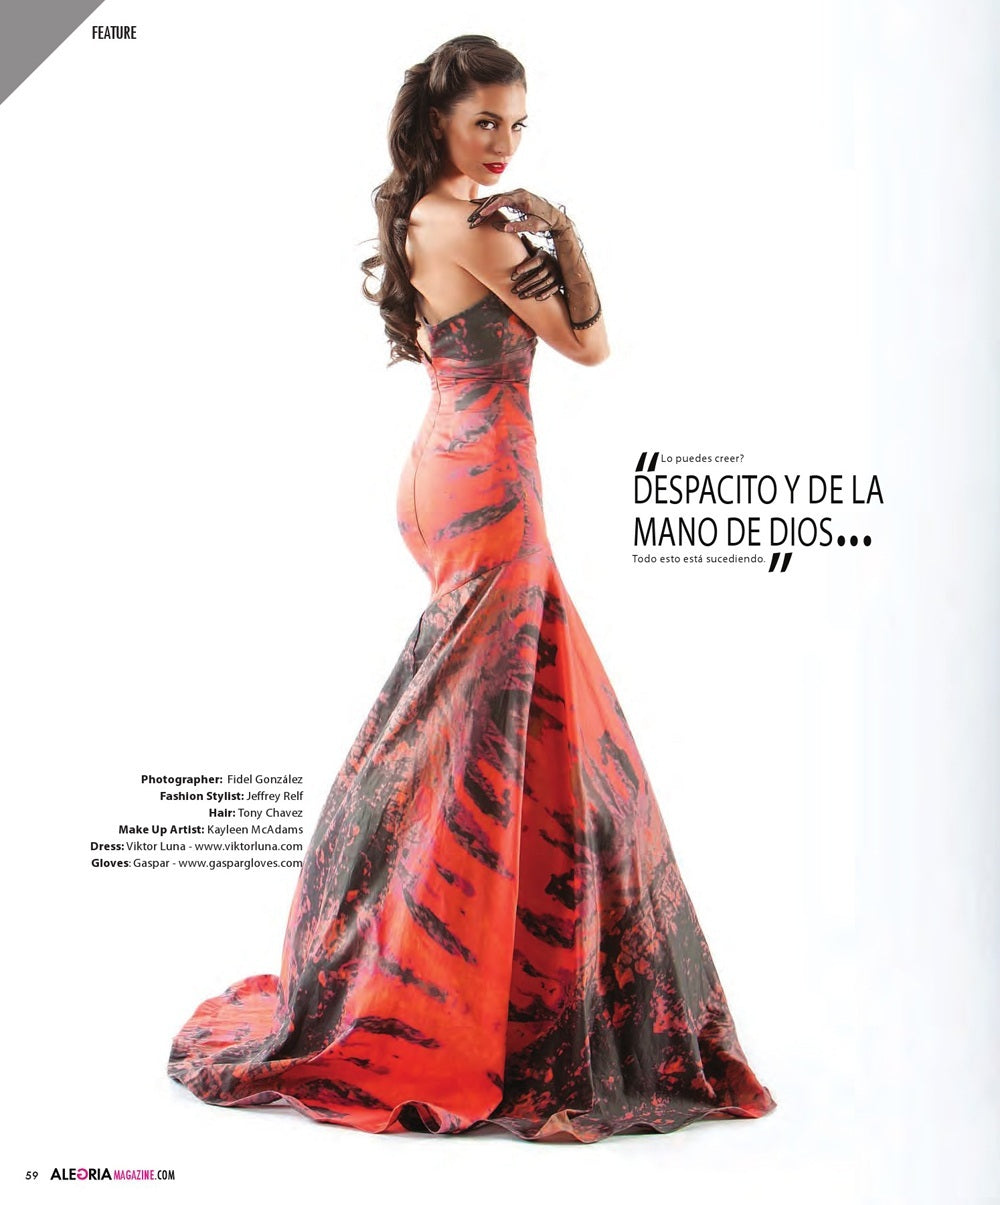 Alegria Magazine - Genesis Rodriguez